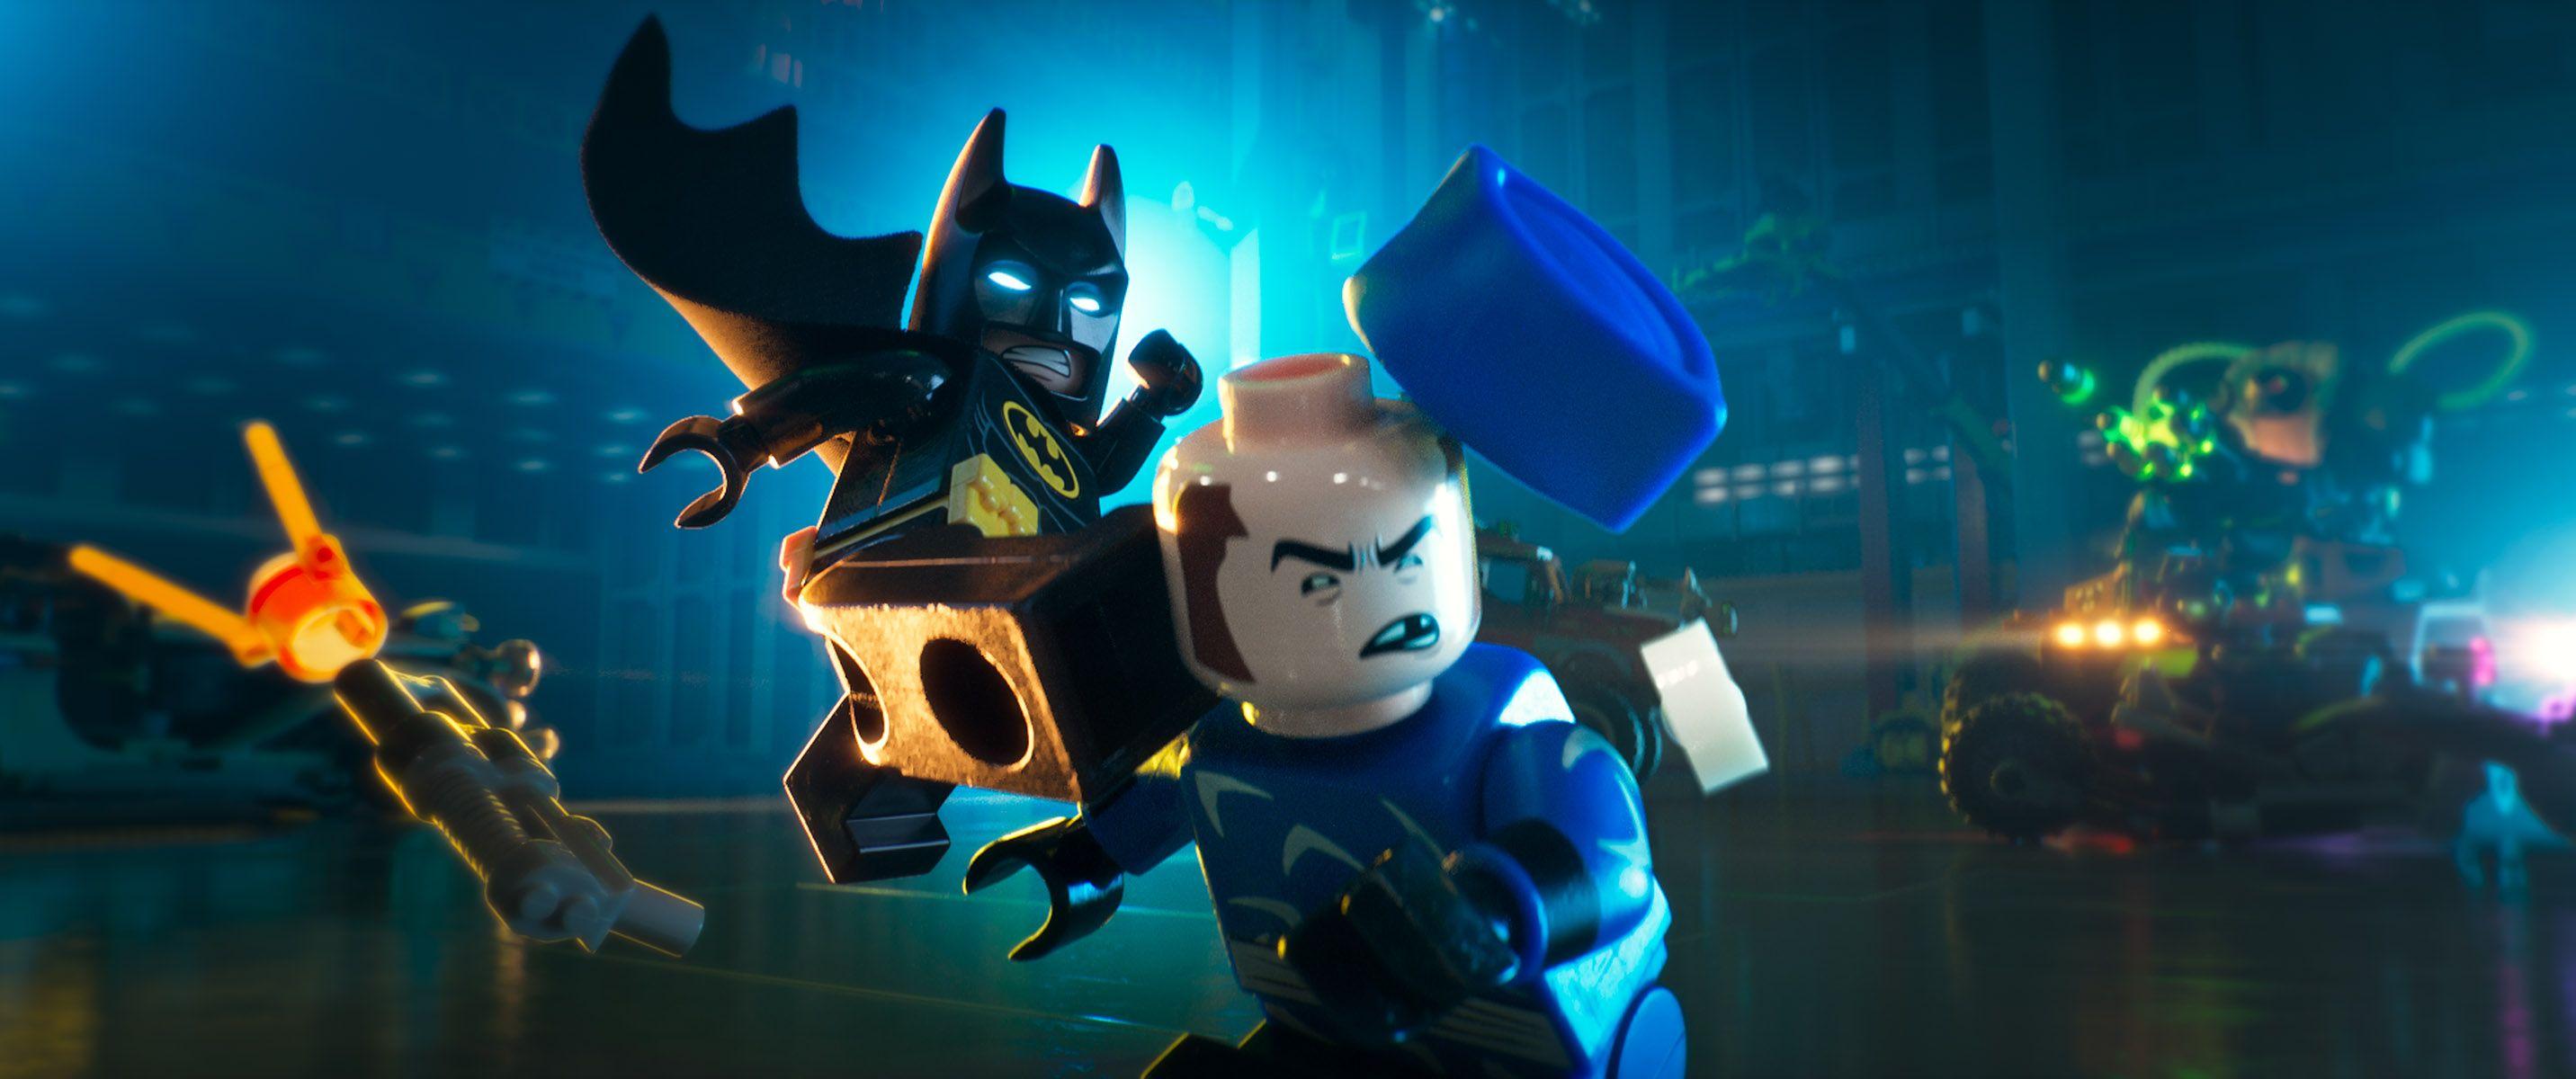 The Lego Batman Movie Batman Fight wallpaper HD 2016 in The Lego